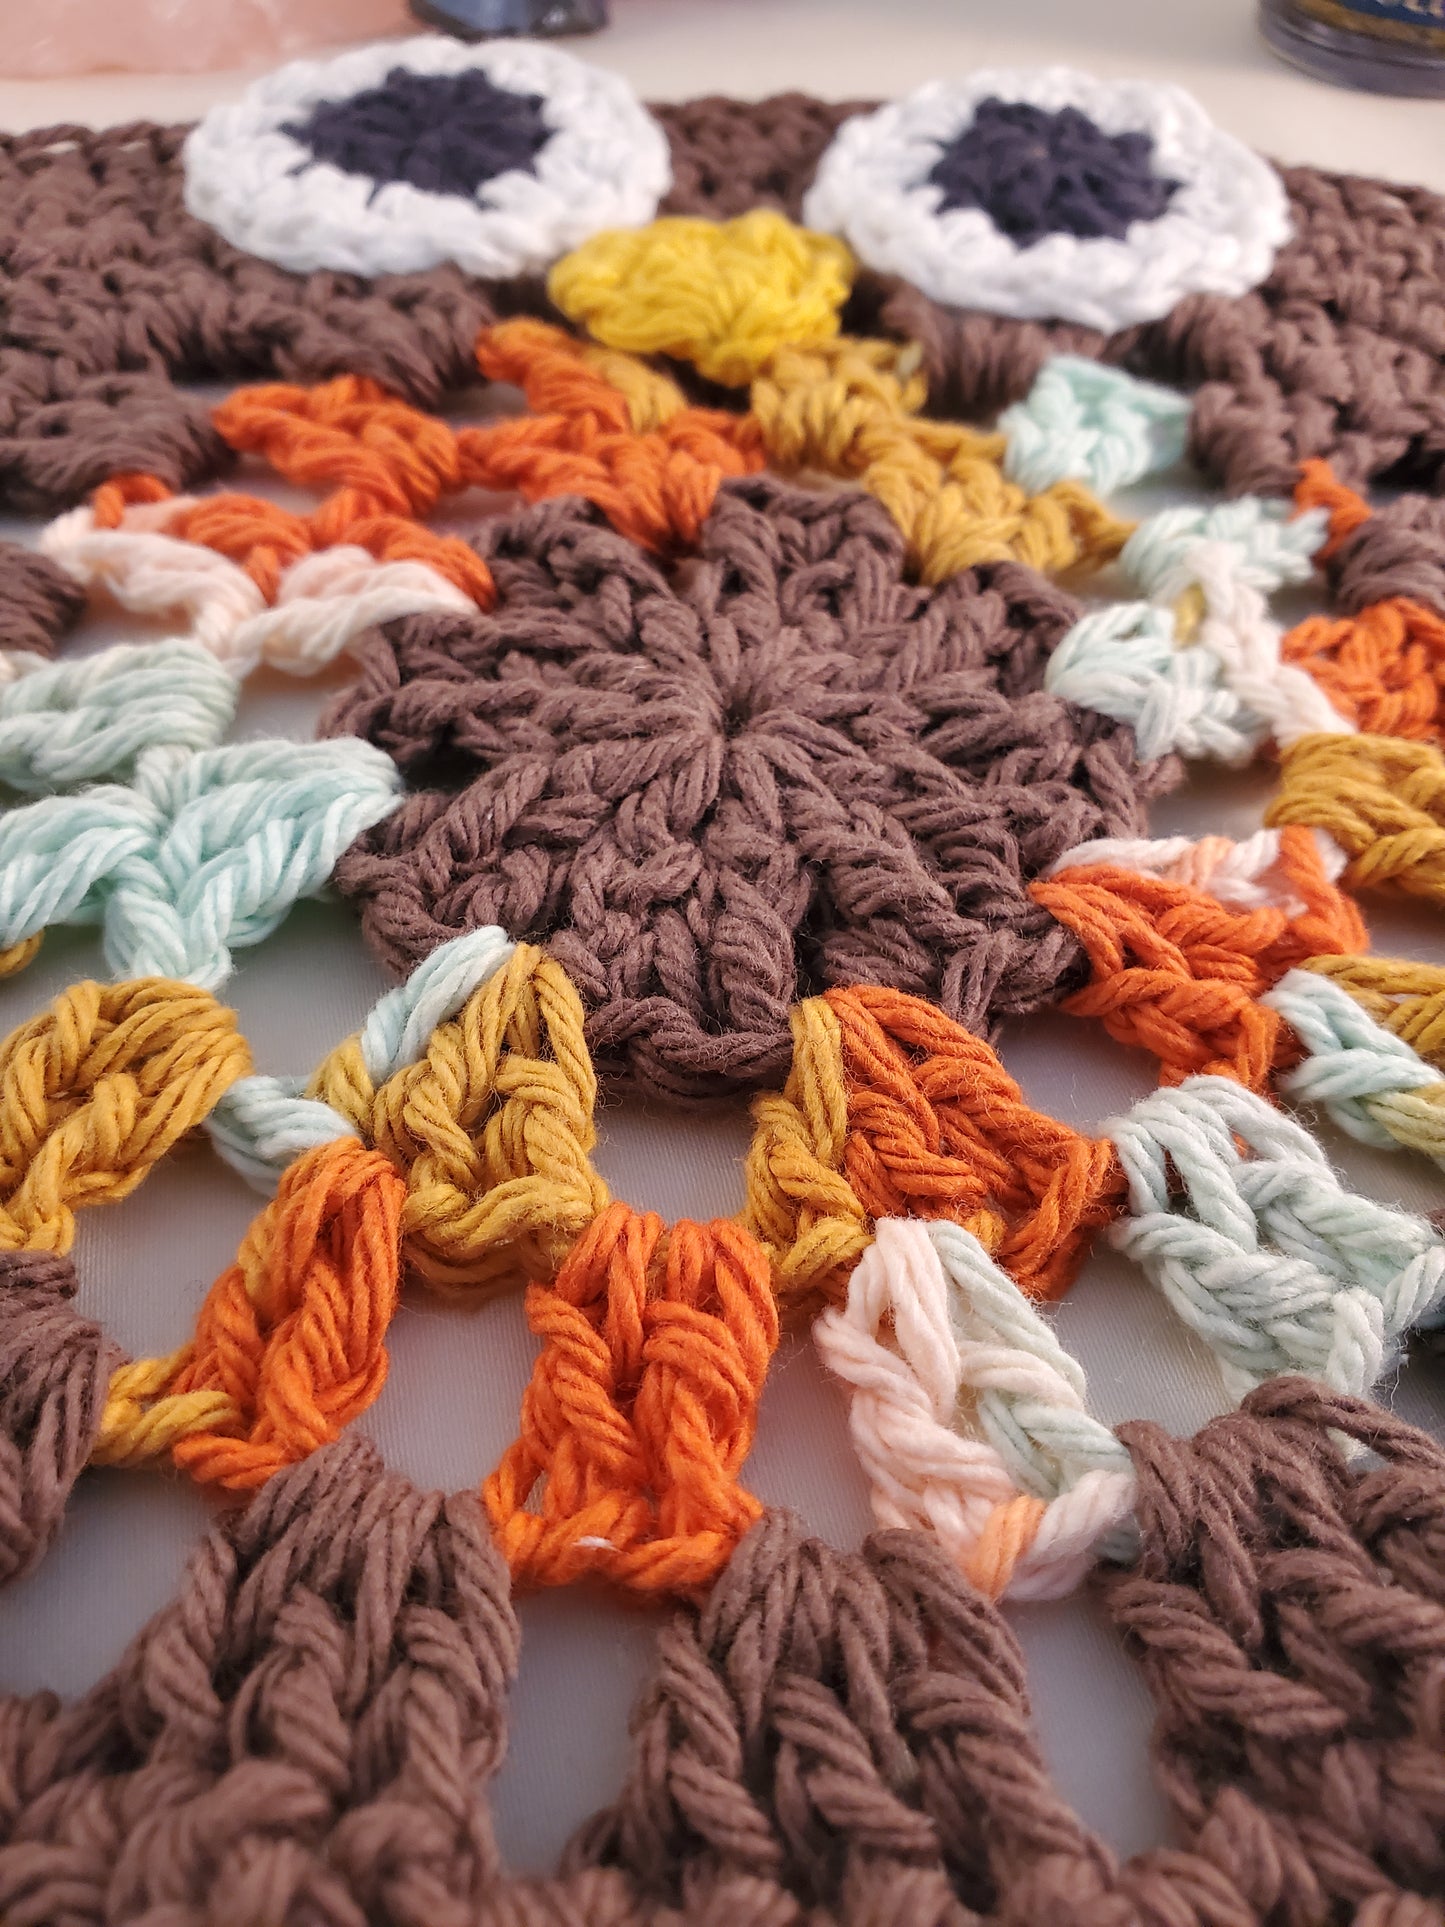 Handmade Owl-Shaped Crochet Hot Pad – Cute 70s Inspired Design